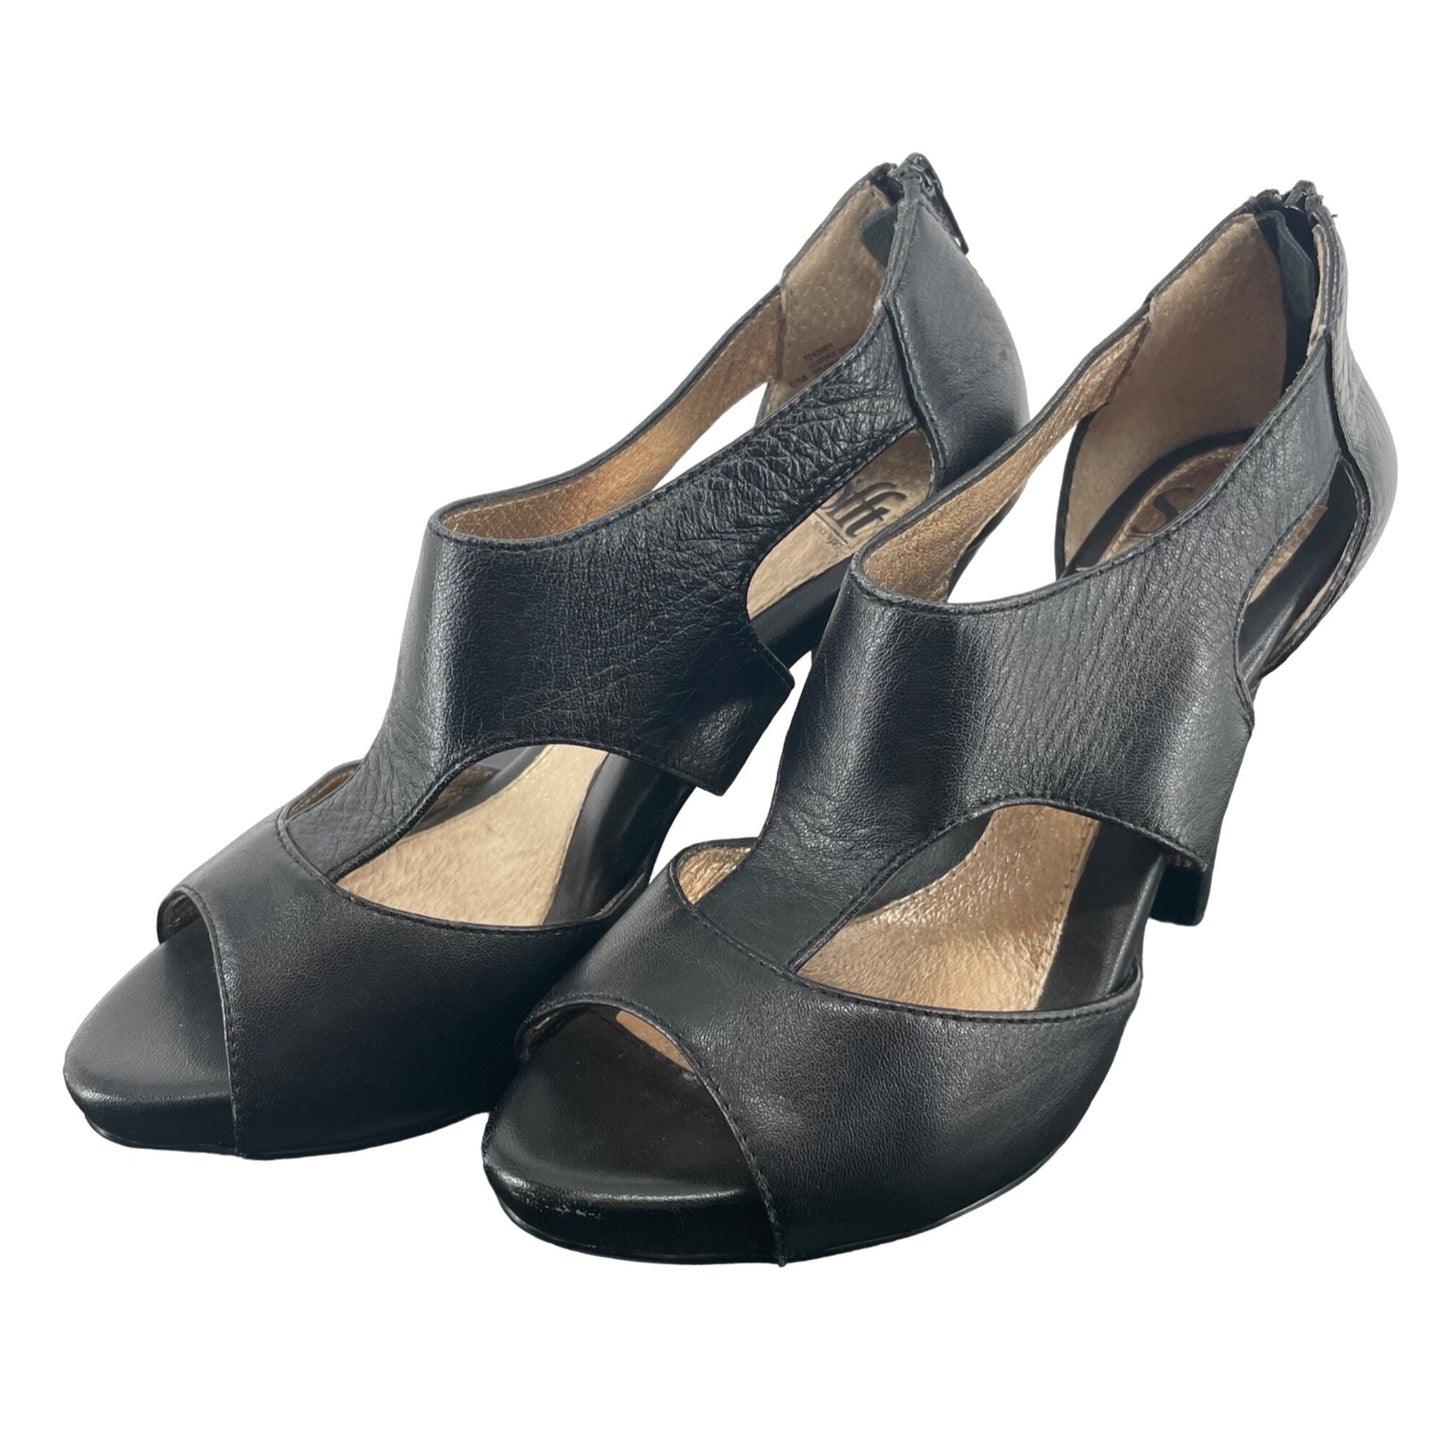 Söfft Women's Size 6 Black Leather Heeled Sandal